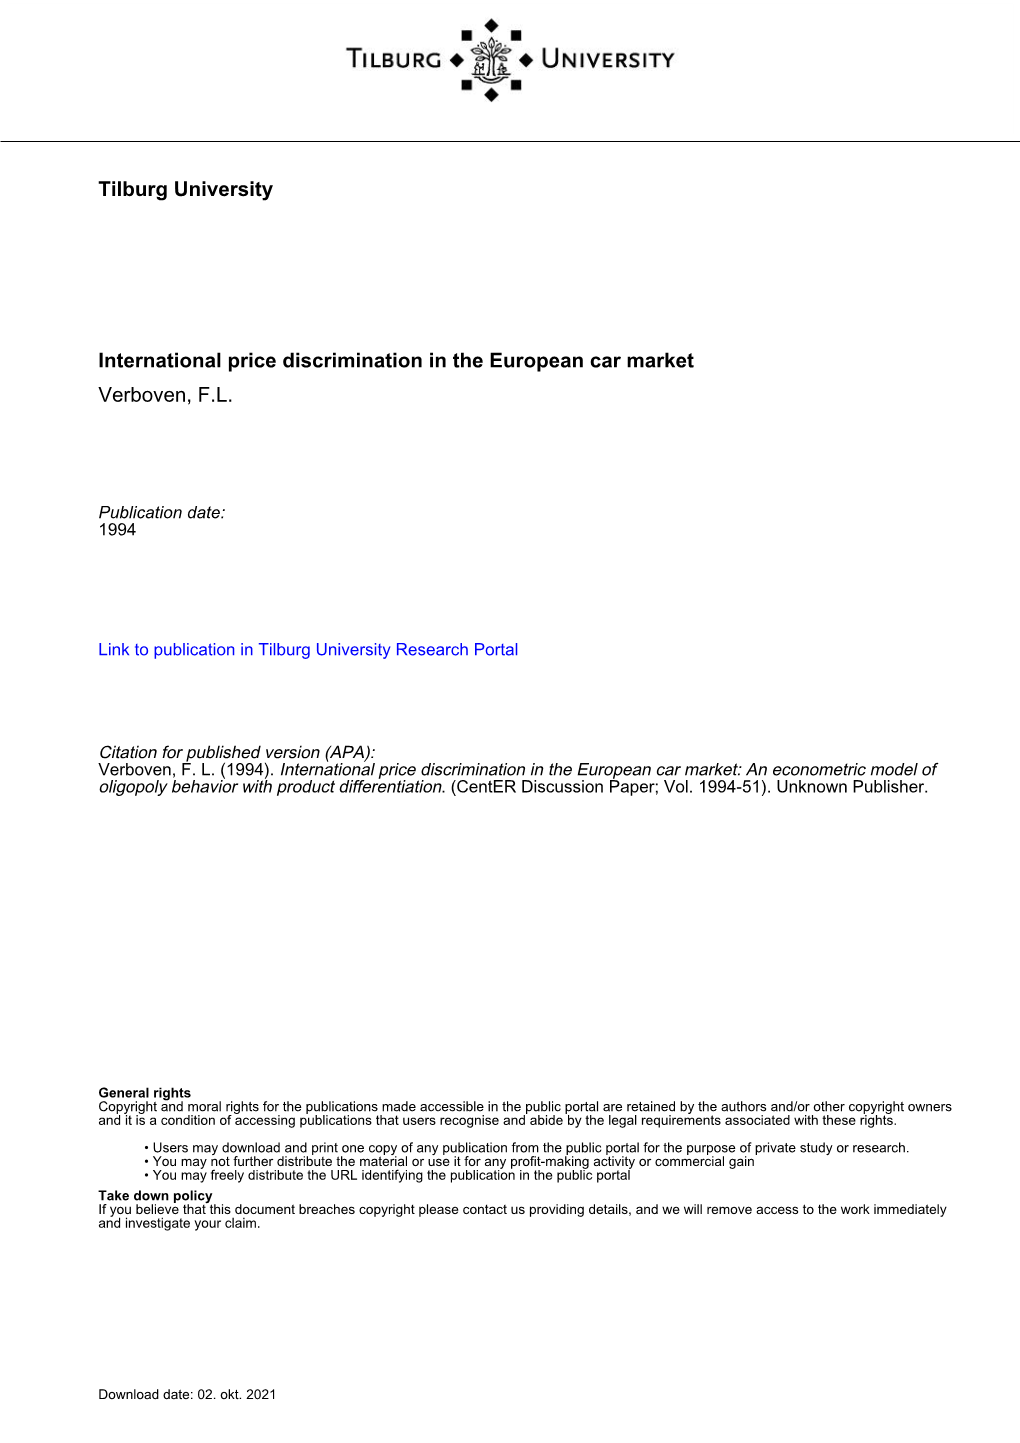 Tilburg University International Price Discrimination in the European Car Market Verboven, F.L